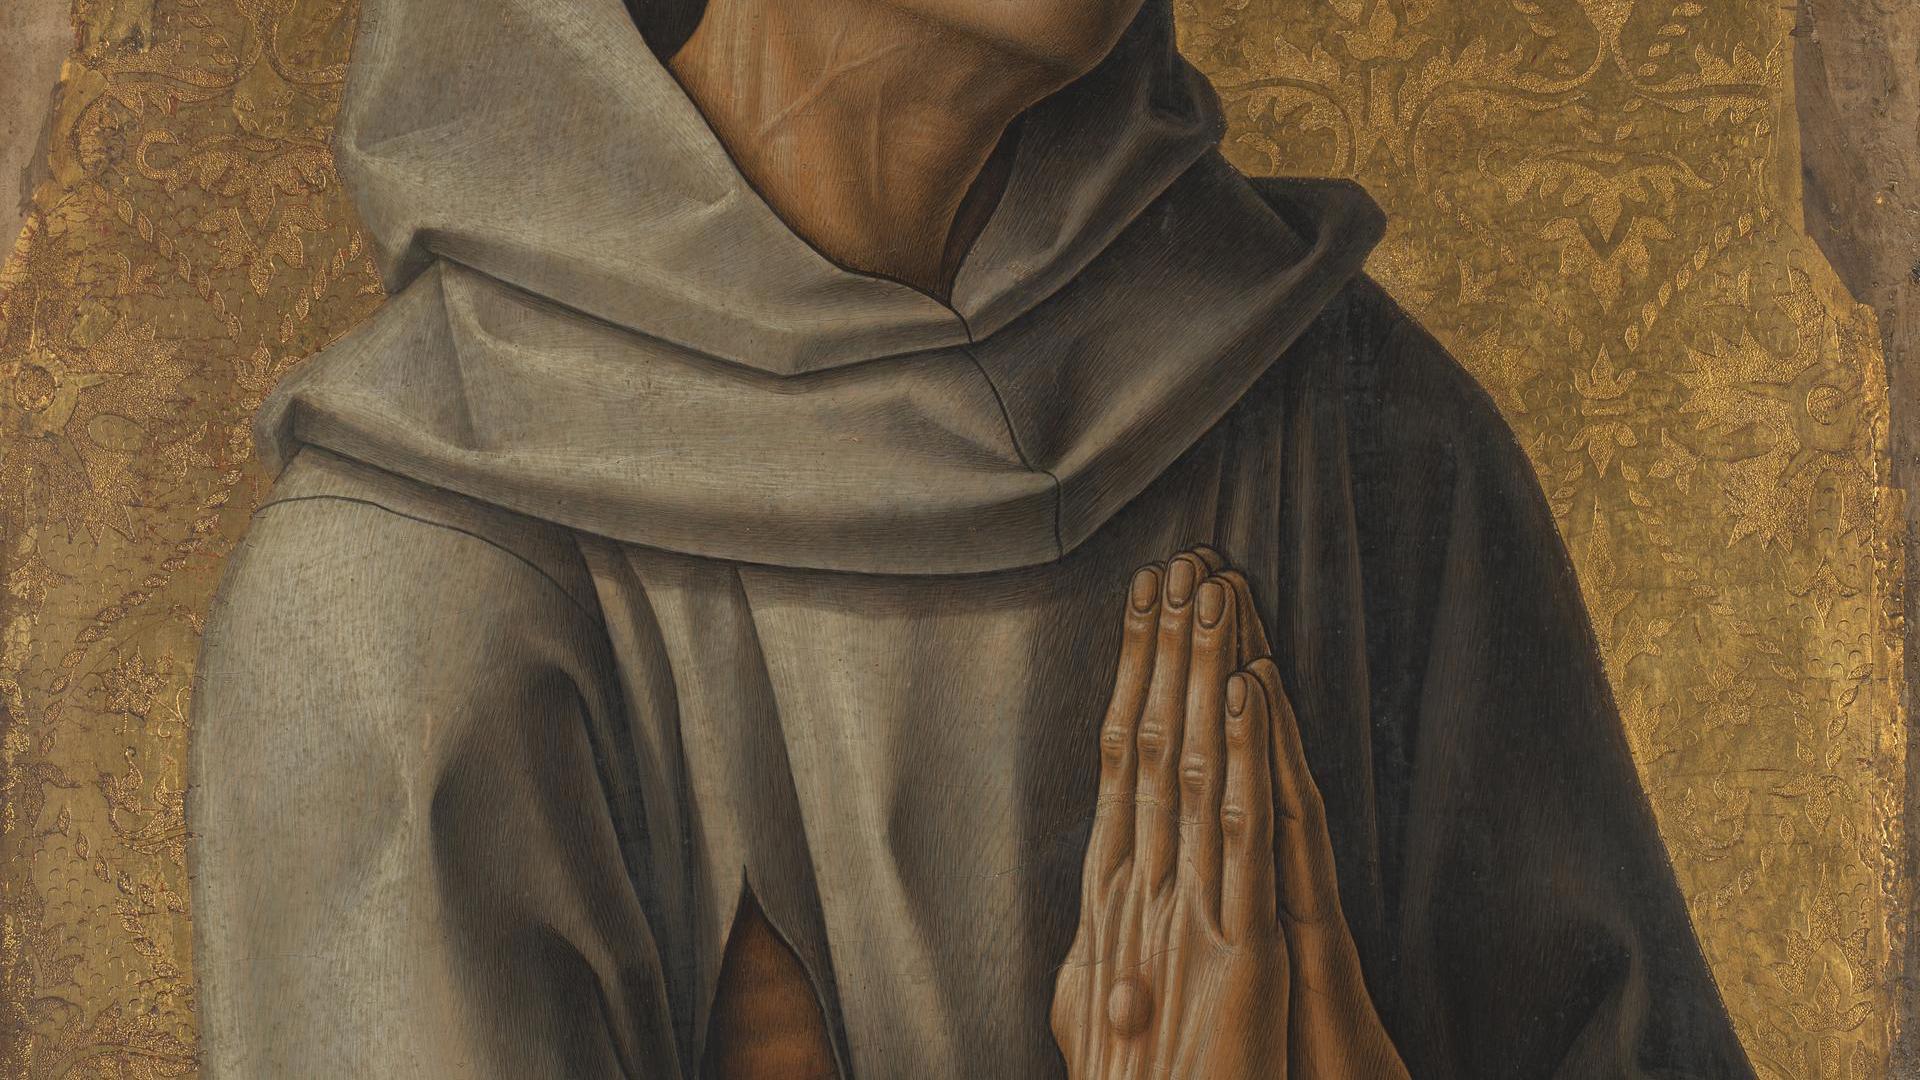 Saint Francis by Carlo Crivelli